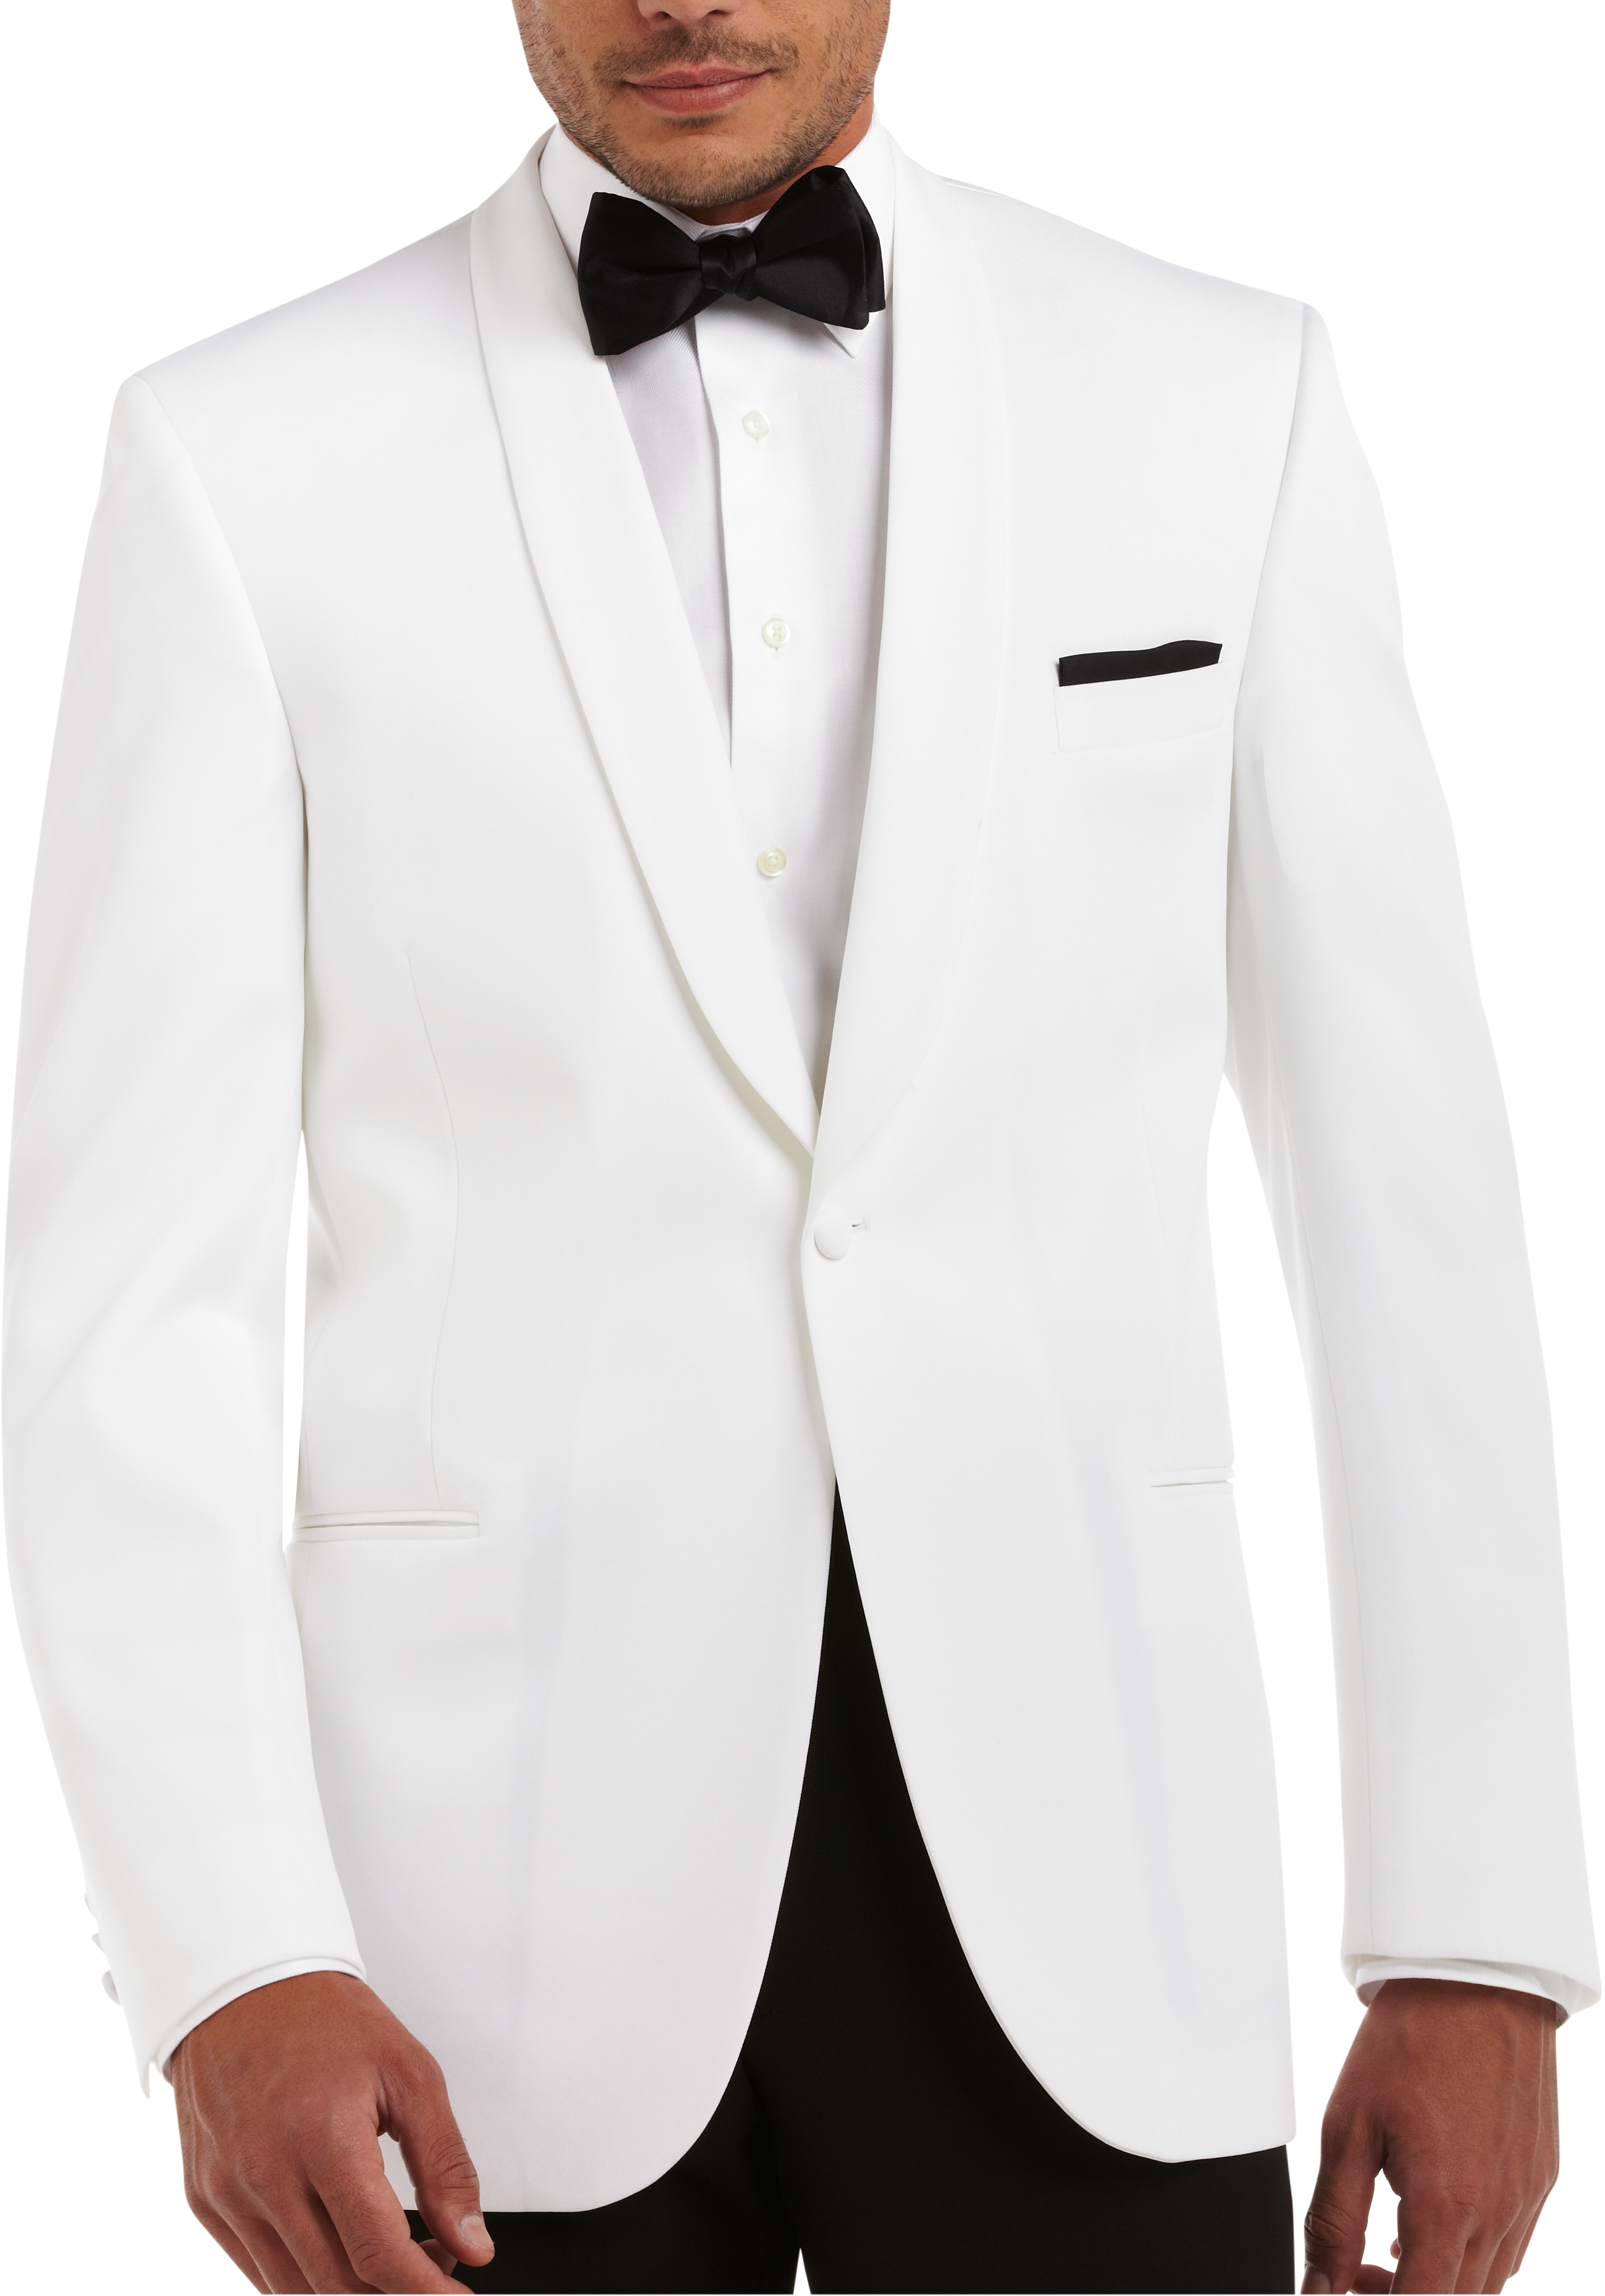 Michael Kors Shawl Collar Modern Fit White Dinner Jacket - Men's Suits ...